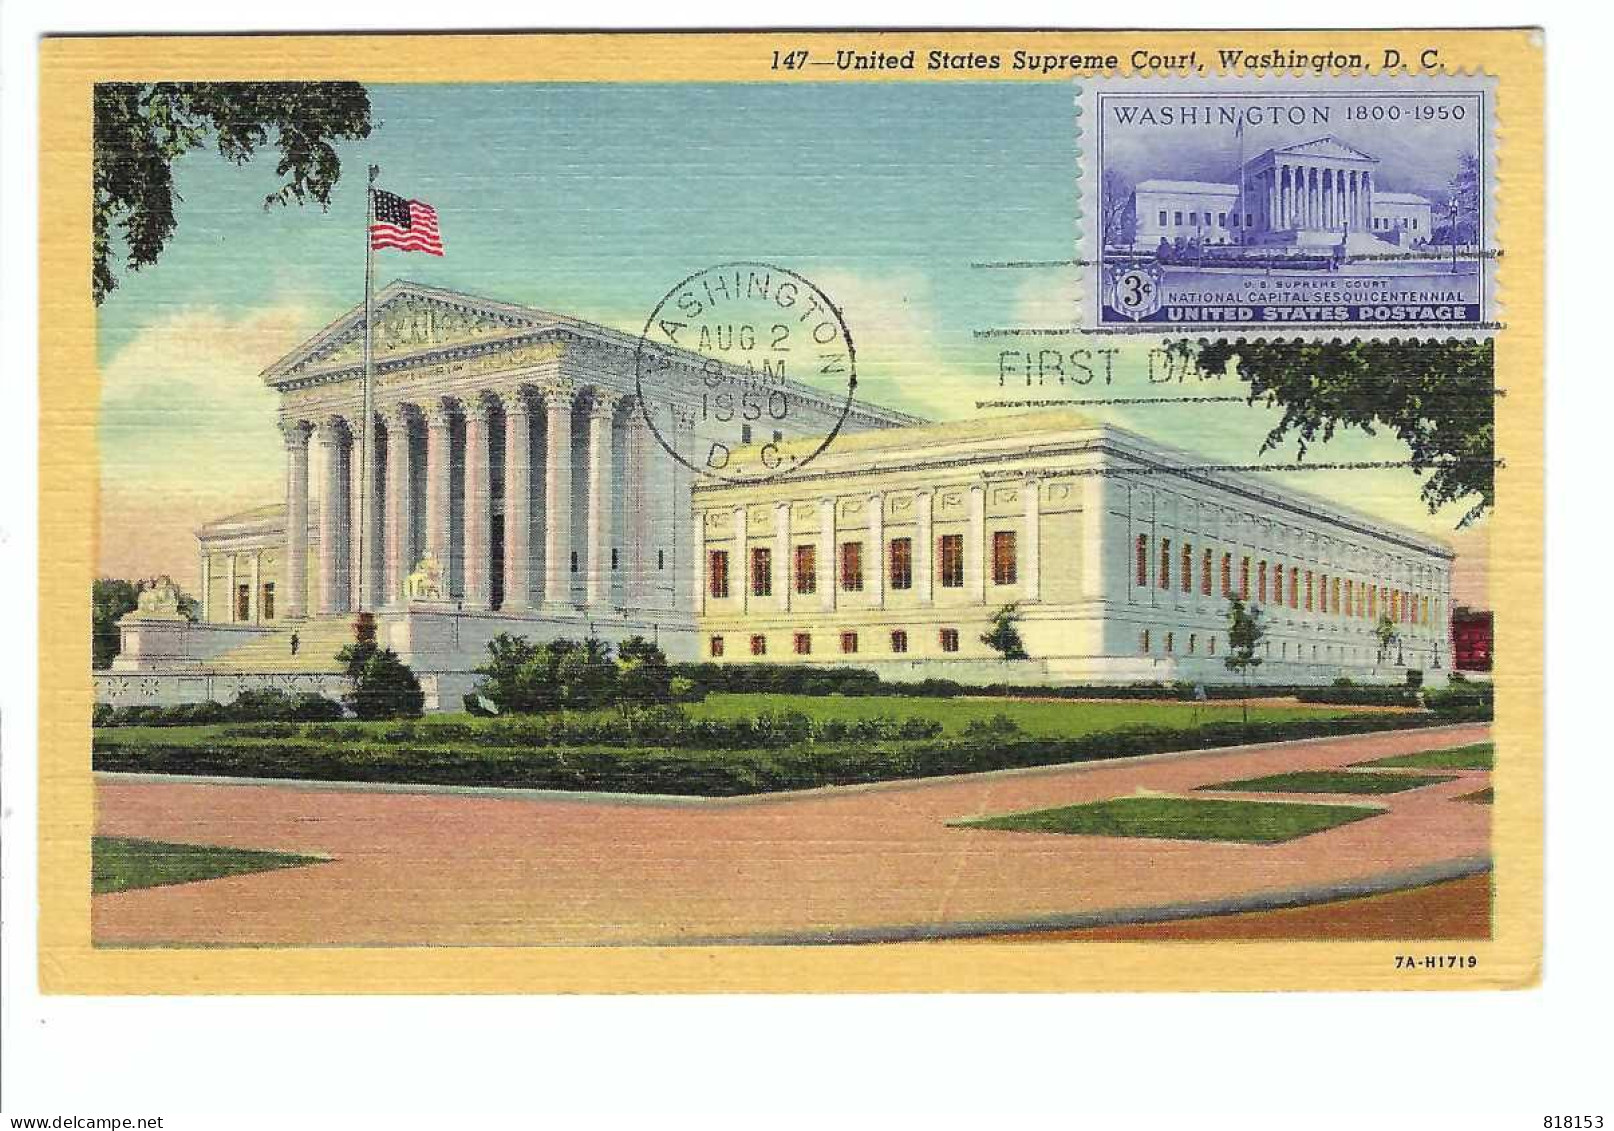 FDC  147 - United States Supreme Court , Washington D C     AUG 2 1950 - Usati